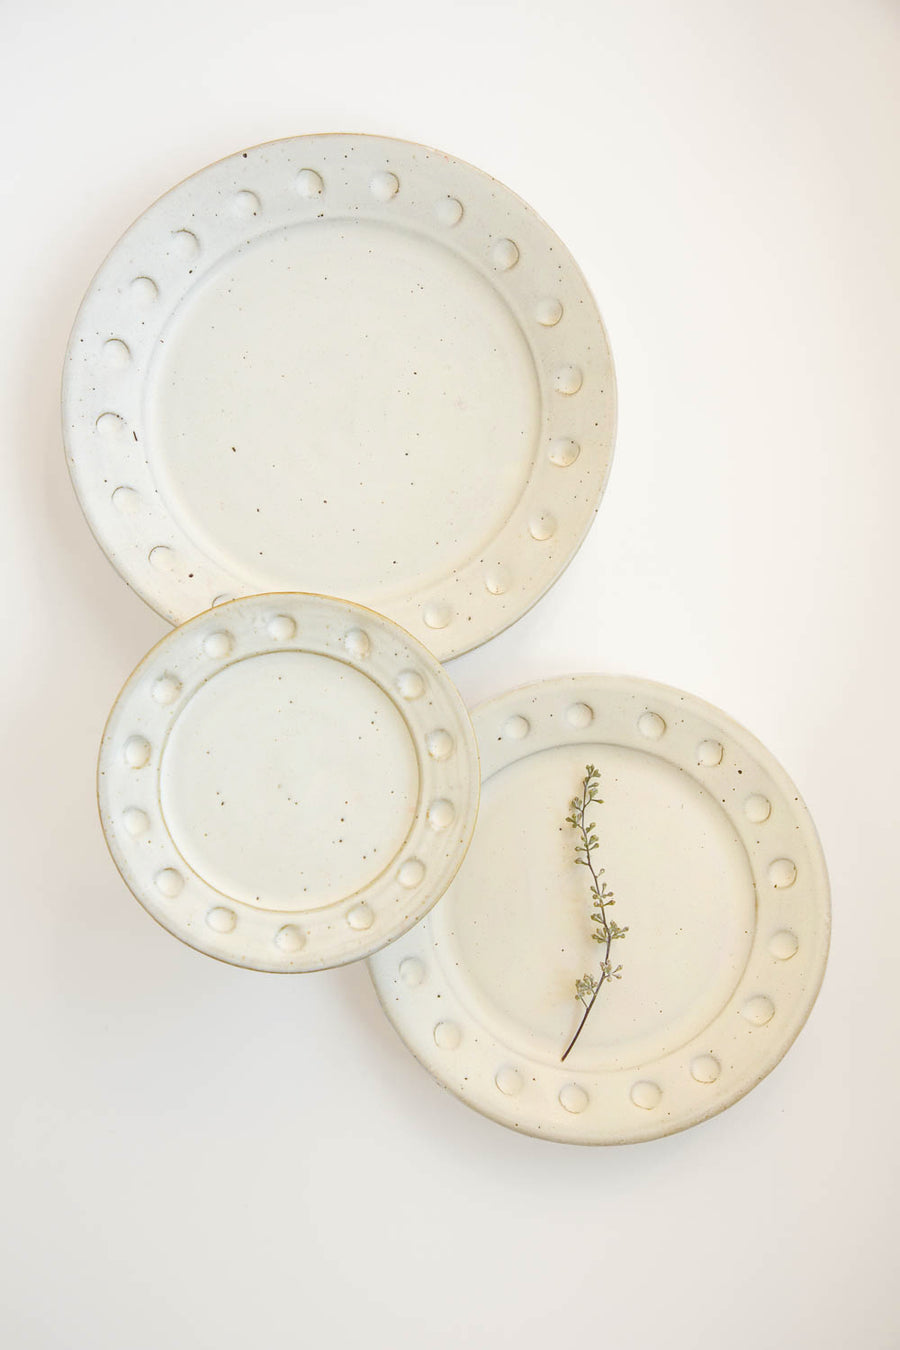 White Clay Plate - Medium (Set of 2)